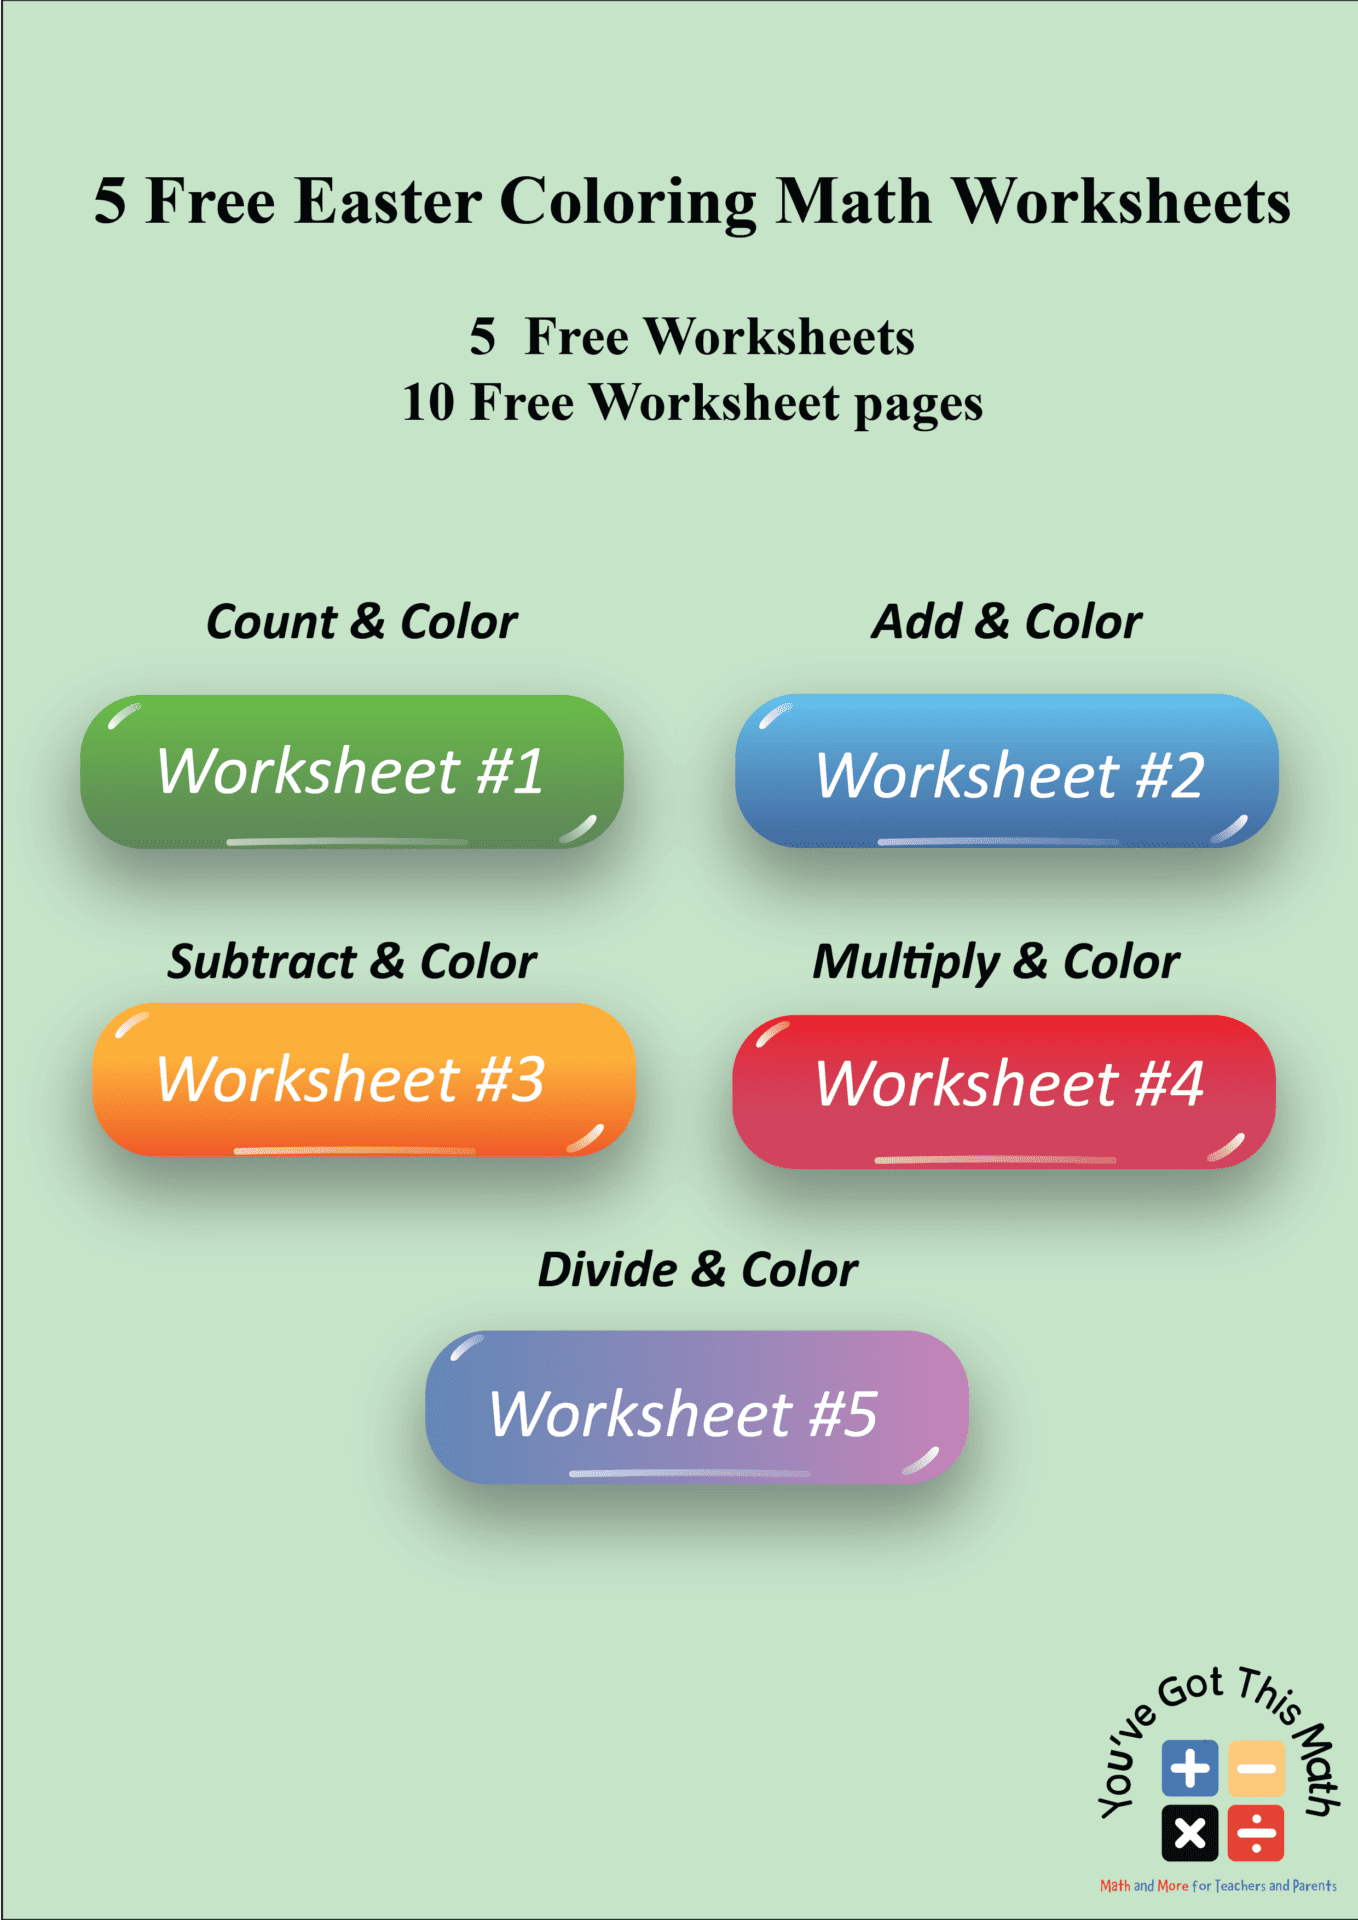 5-free-easter-coloring-math-worksheets-fun-printable